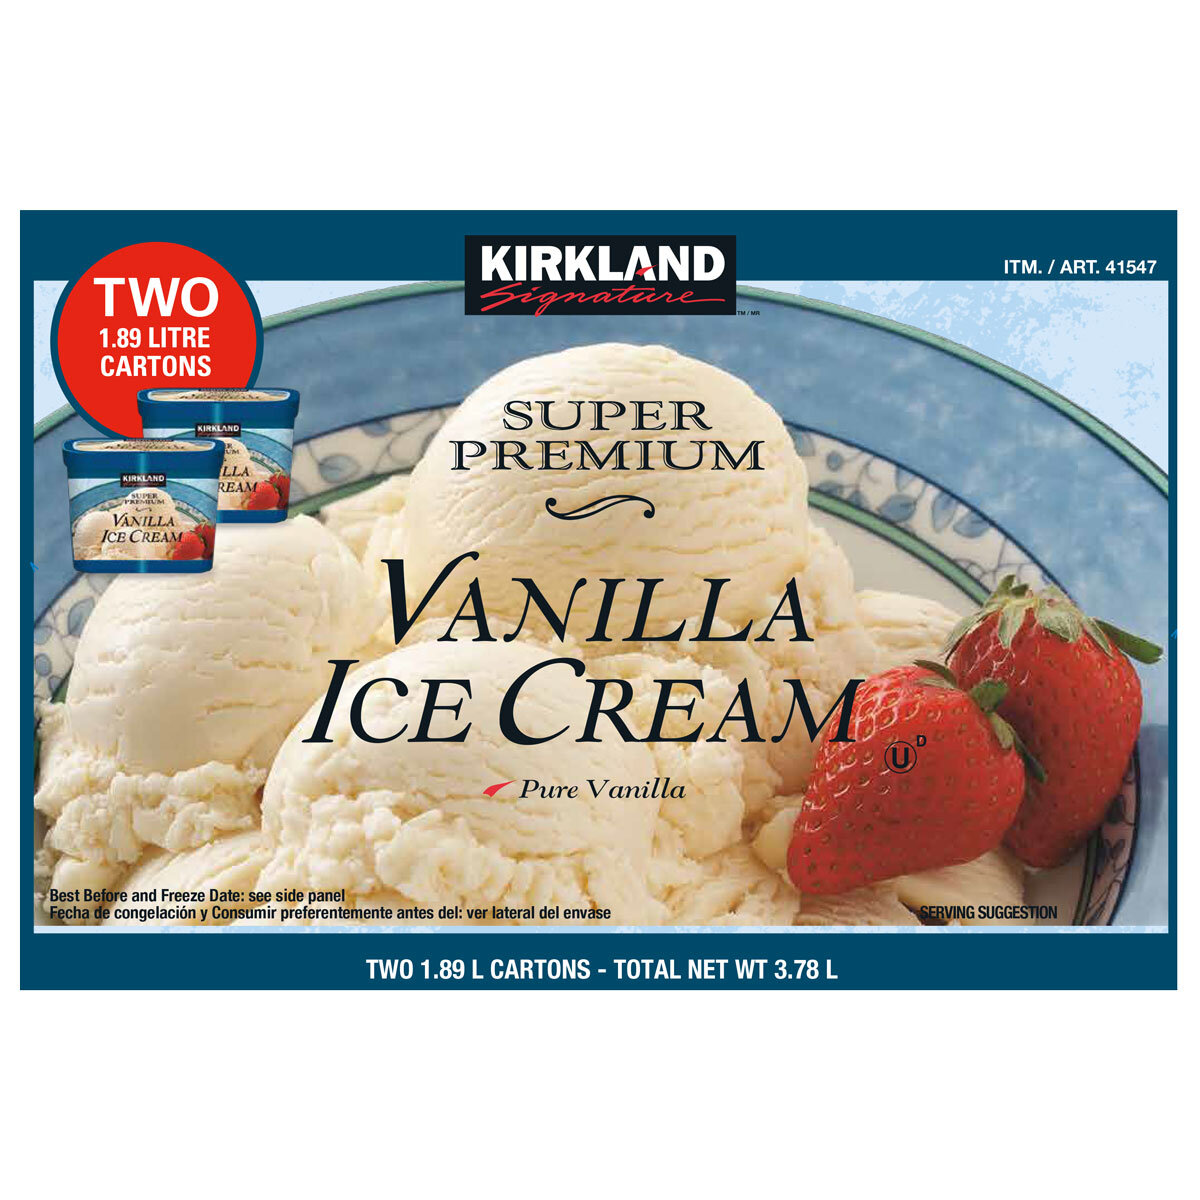 Kirkland Singature Vanilla Icecream pack